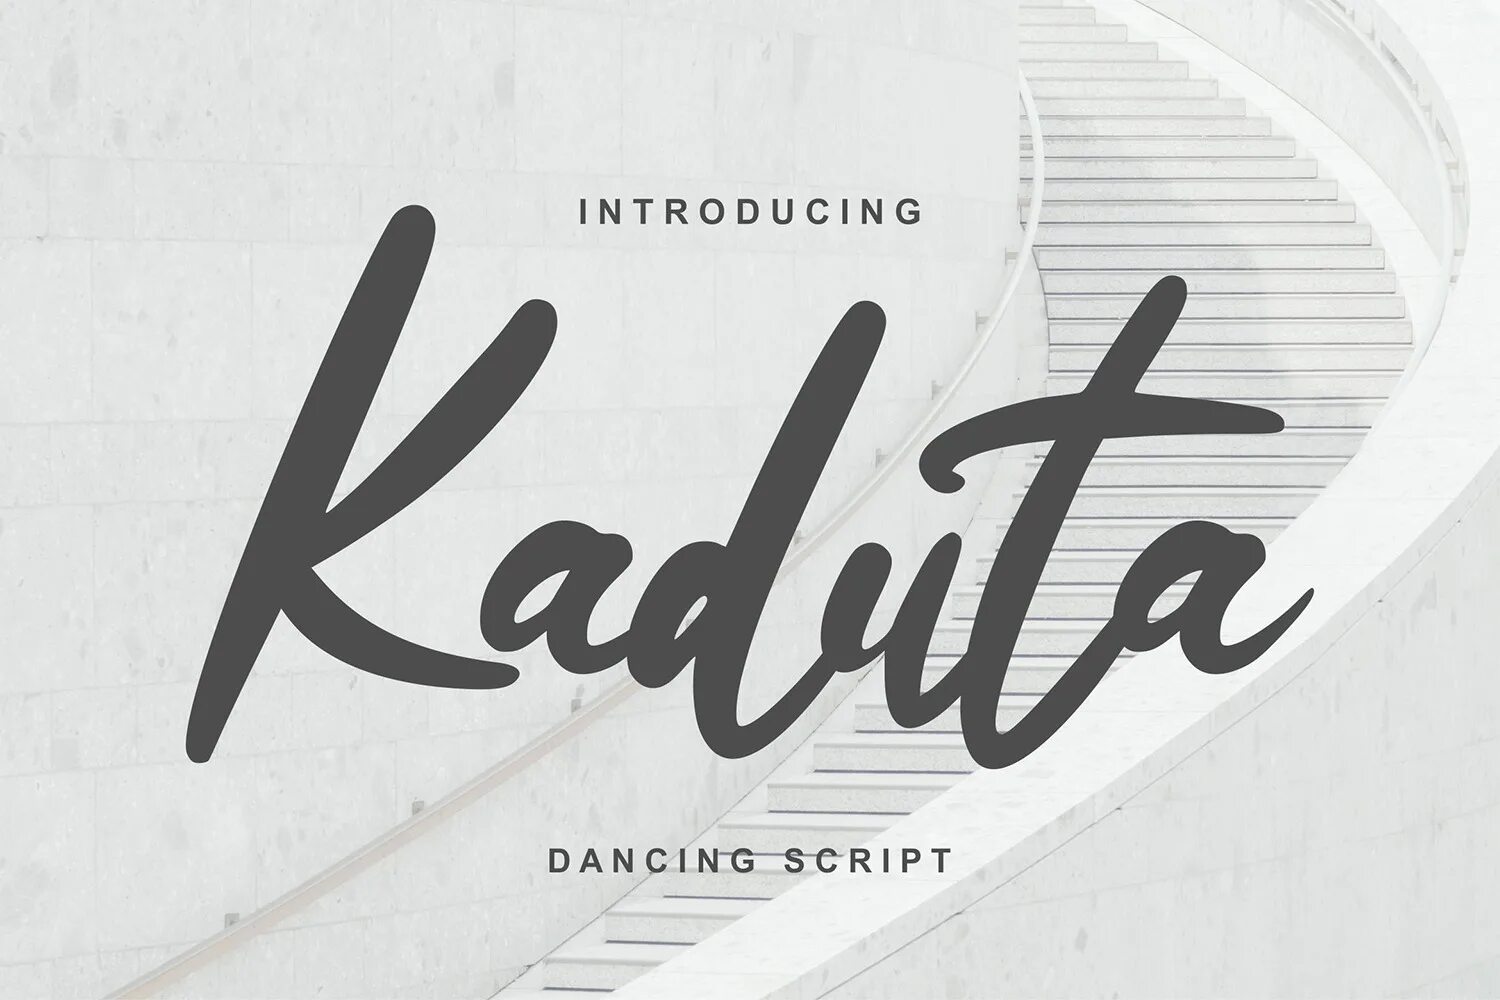 Dances script. Шрифт танцы. Шрифт Dancing script. Логотипы с рукописным шрифтом. Шрифт Dance лицензия.